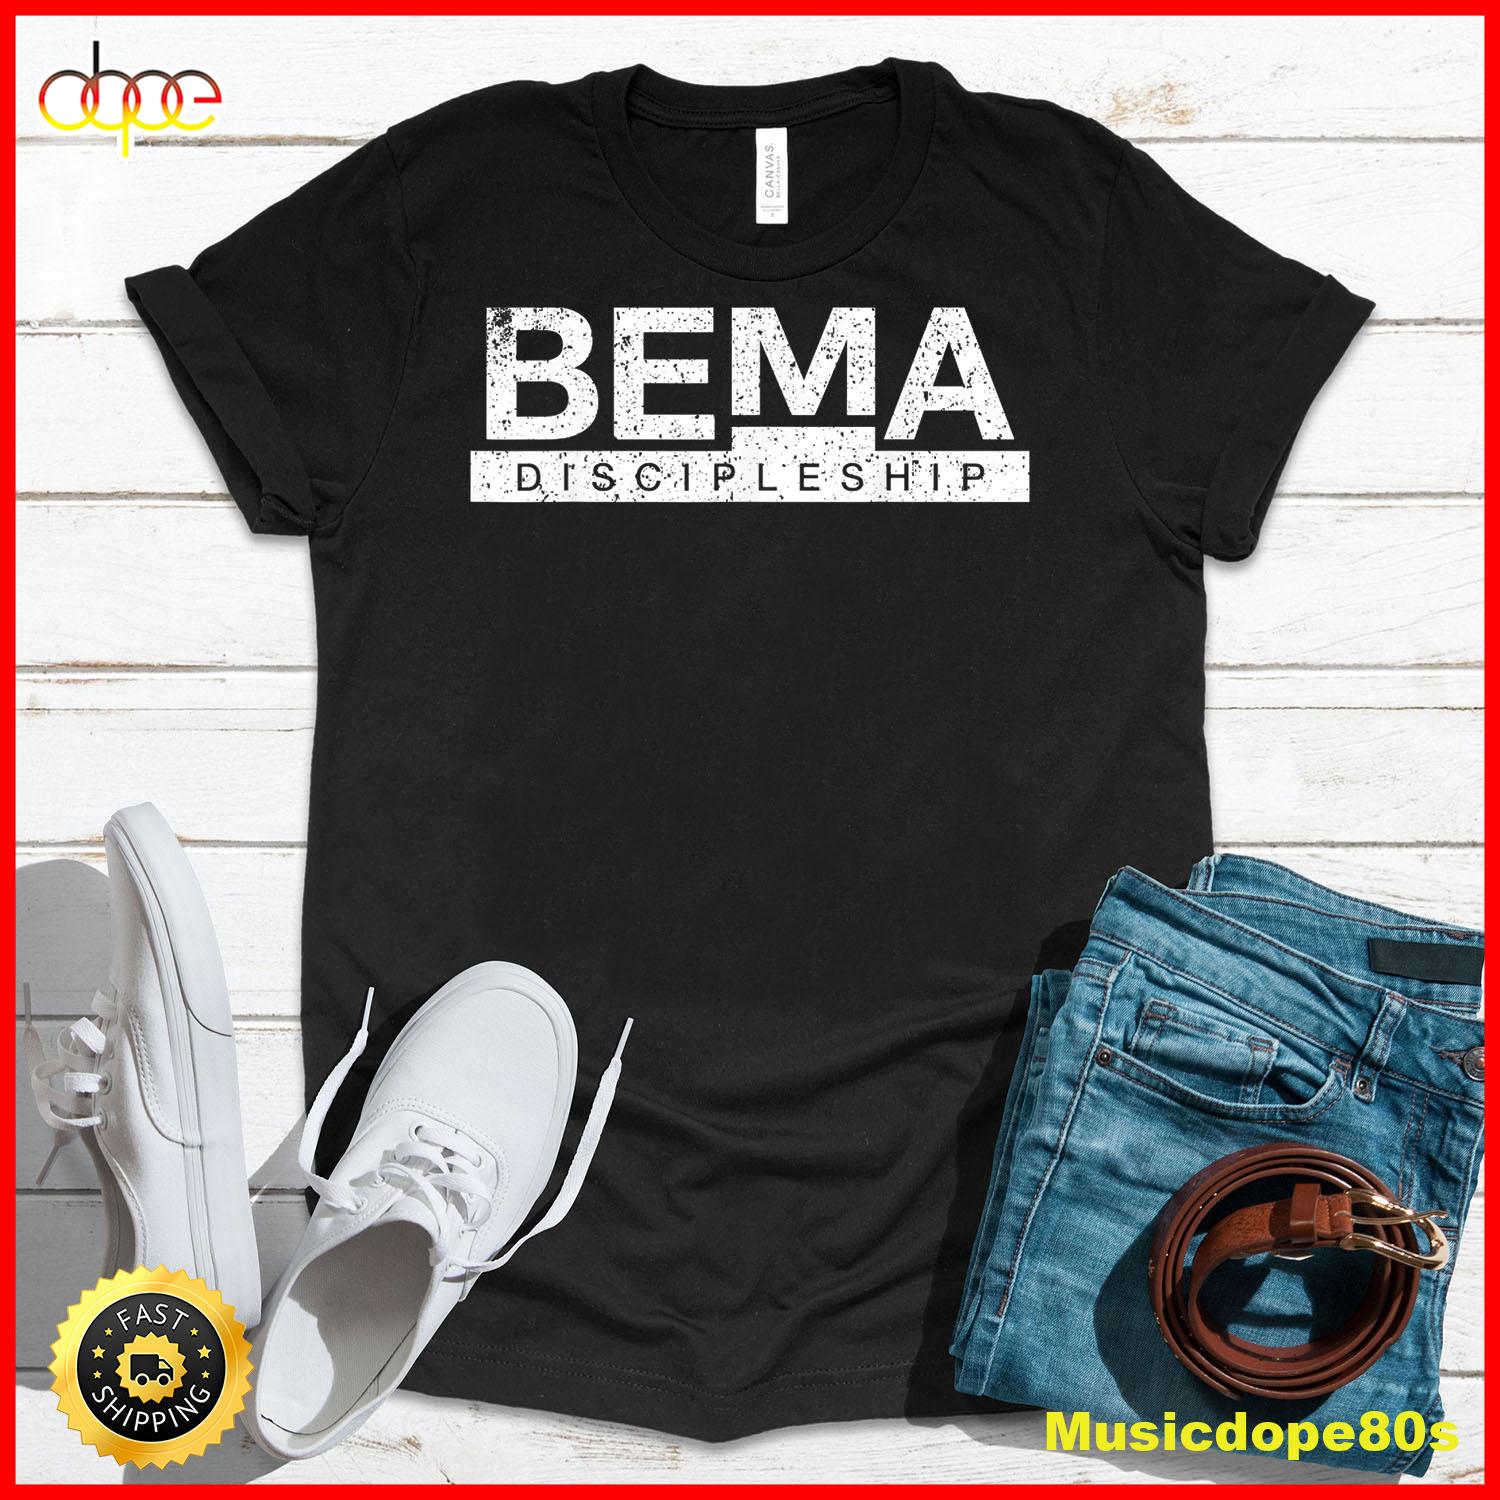 Vintage BEMA Discipleship Plain Black Tee T Shirt